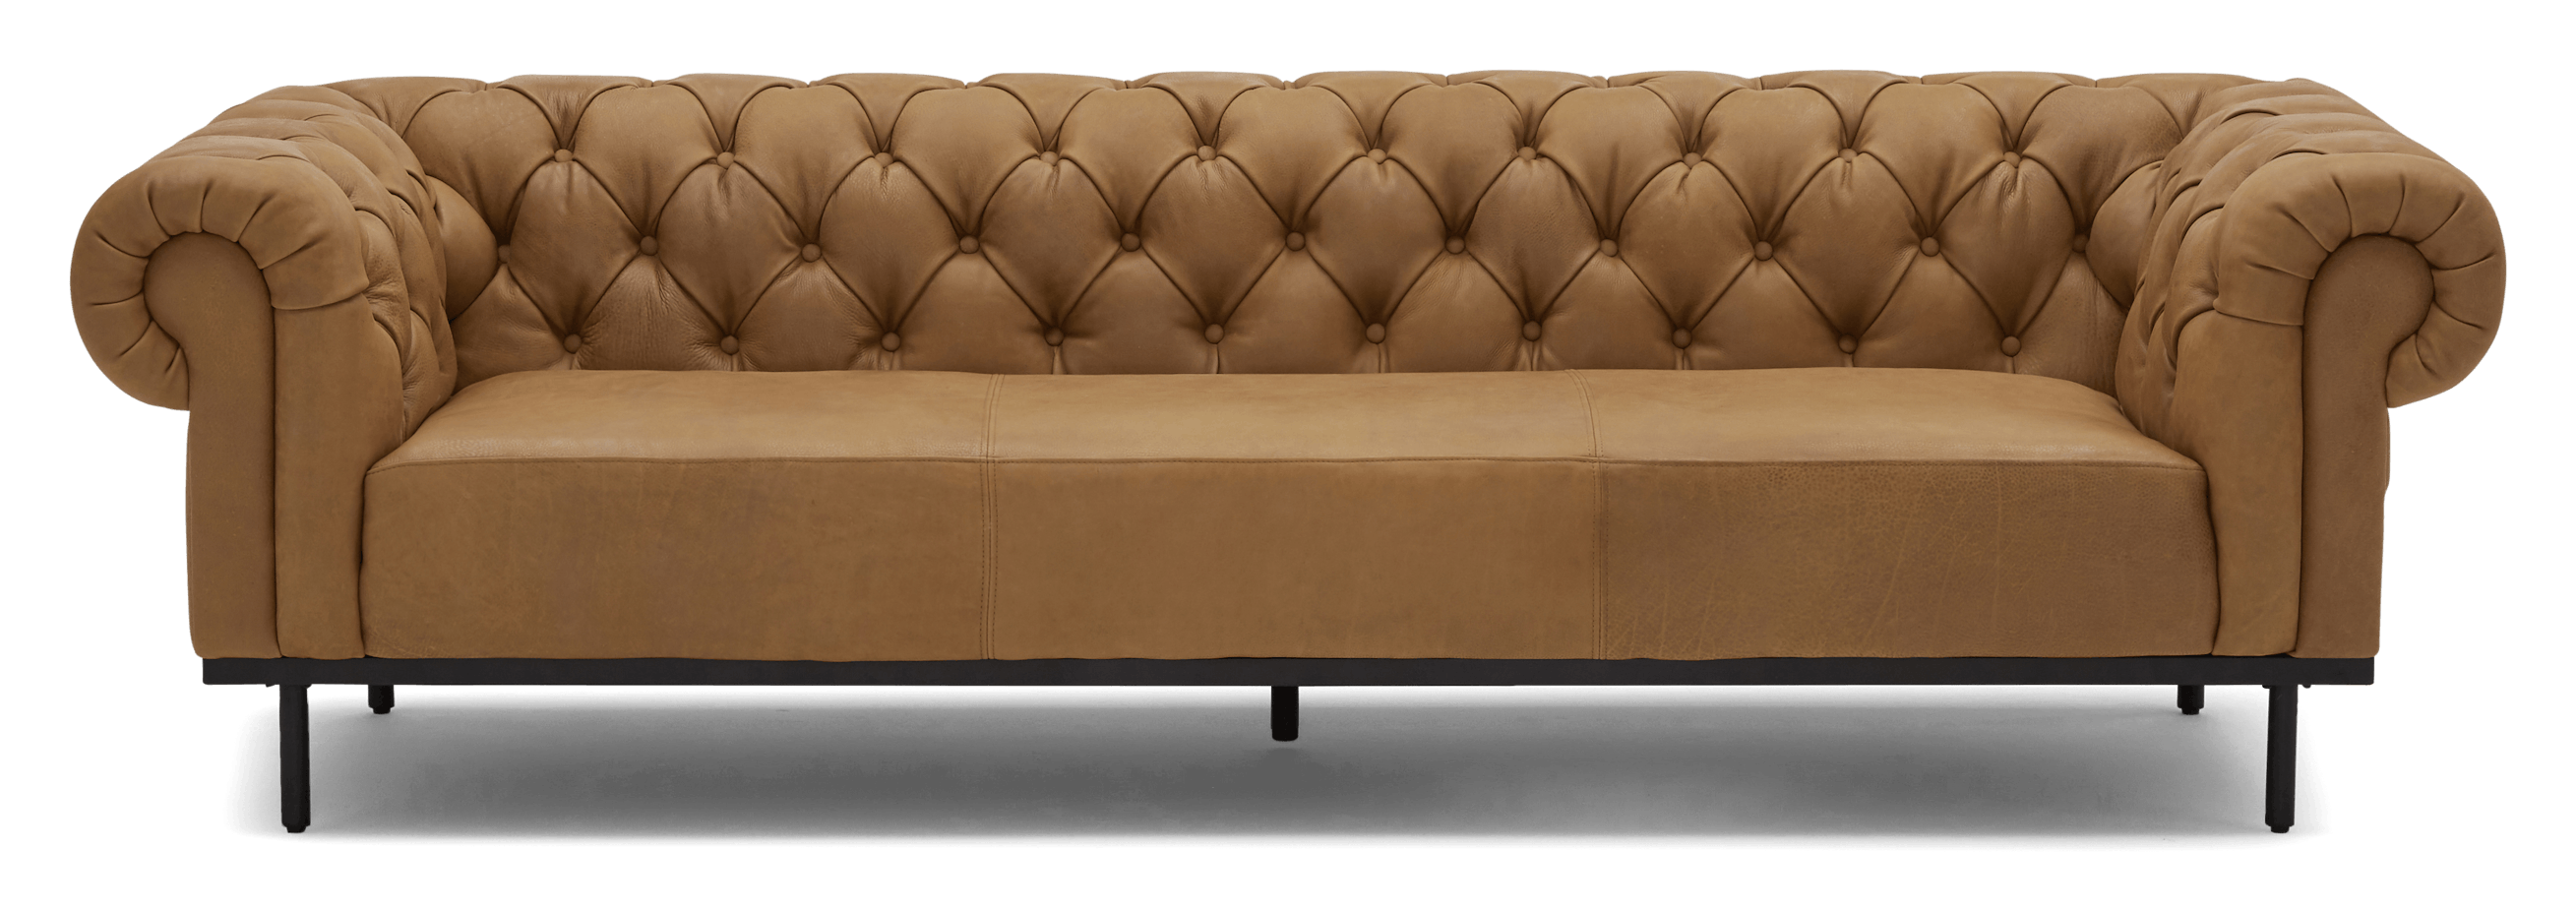 worthy leather sofa joybird